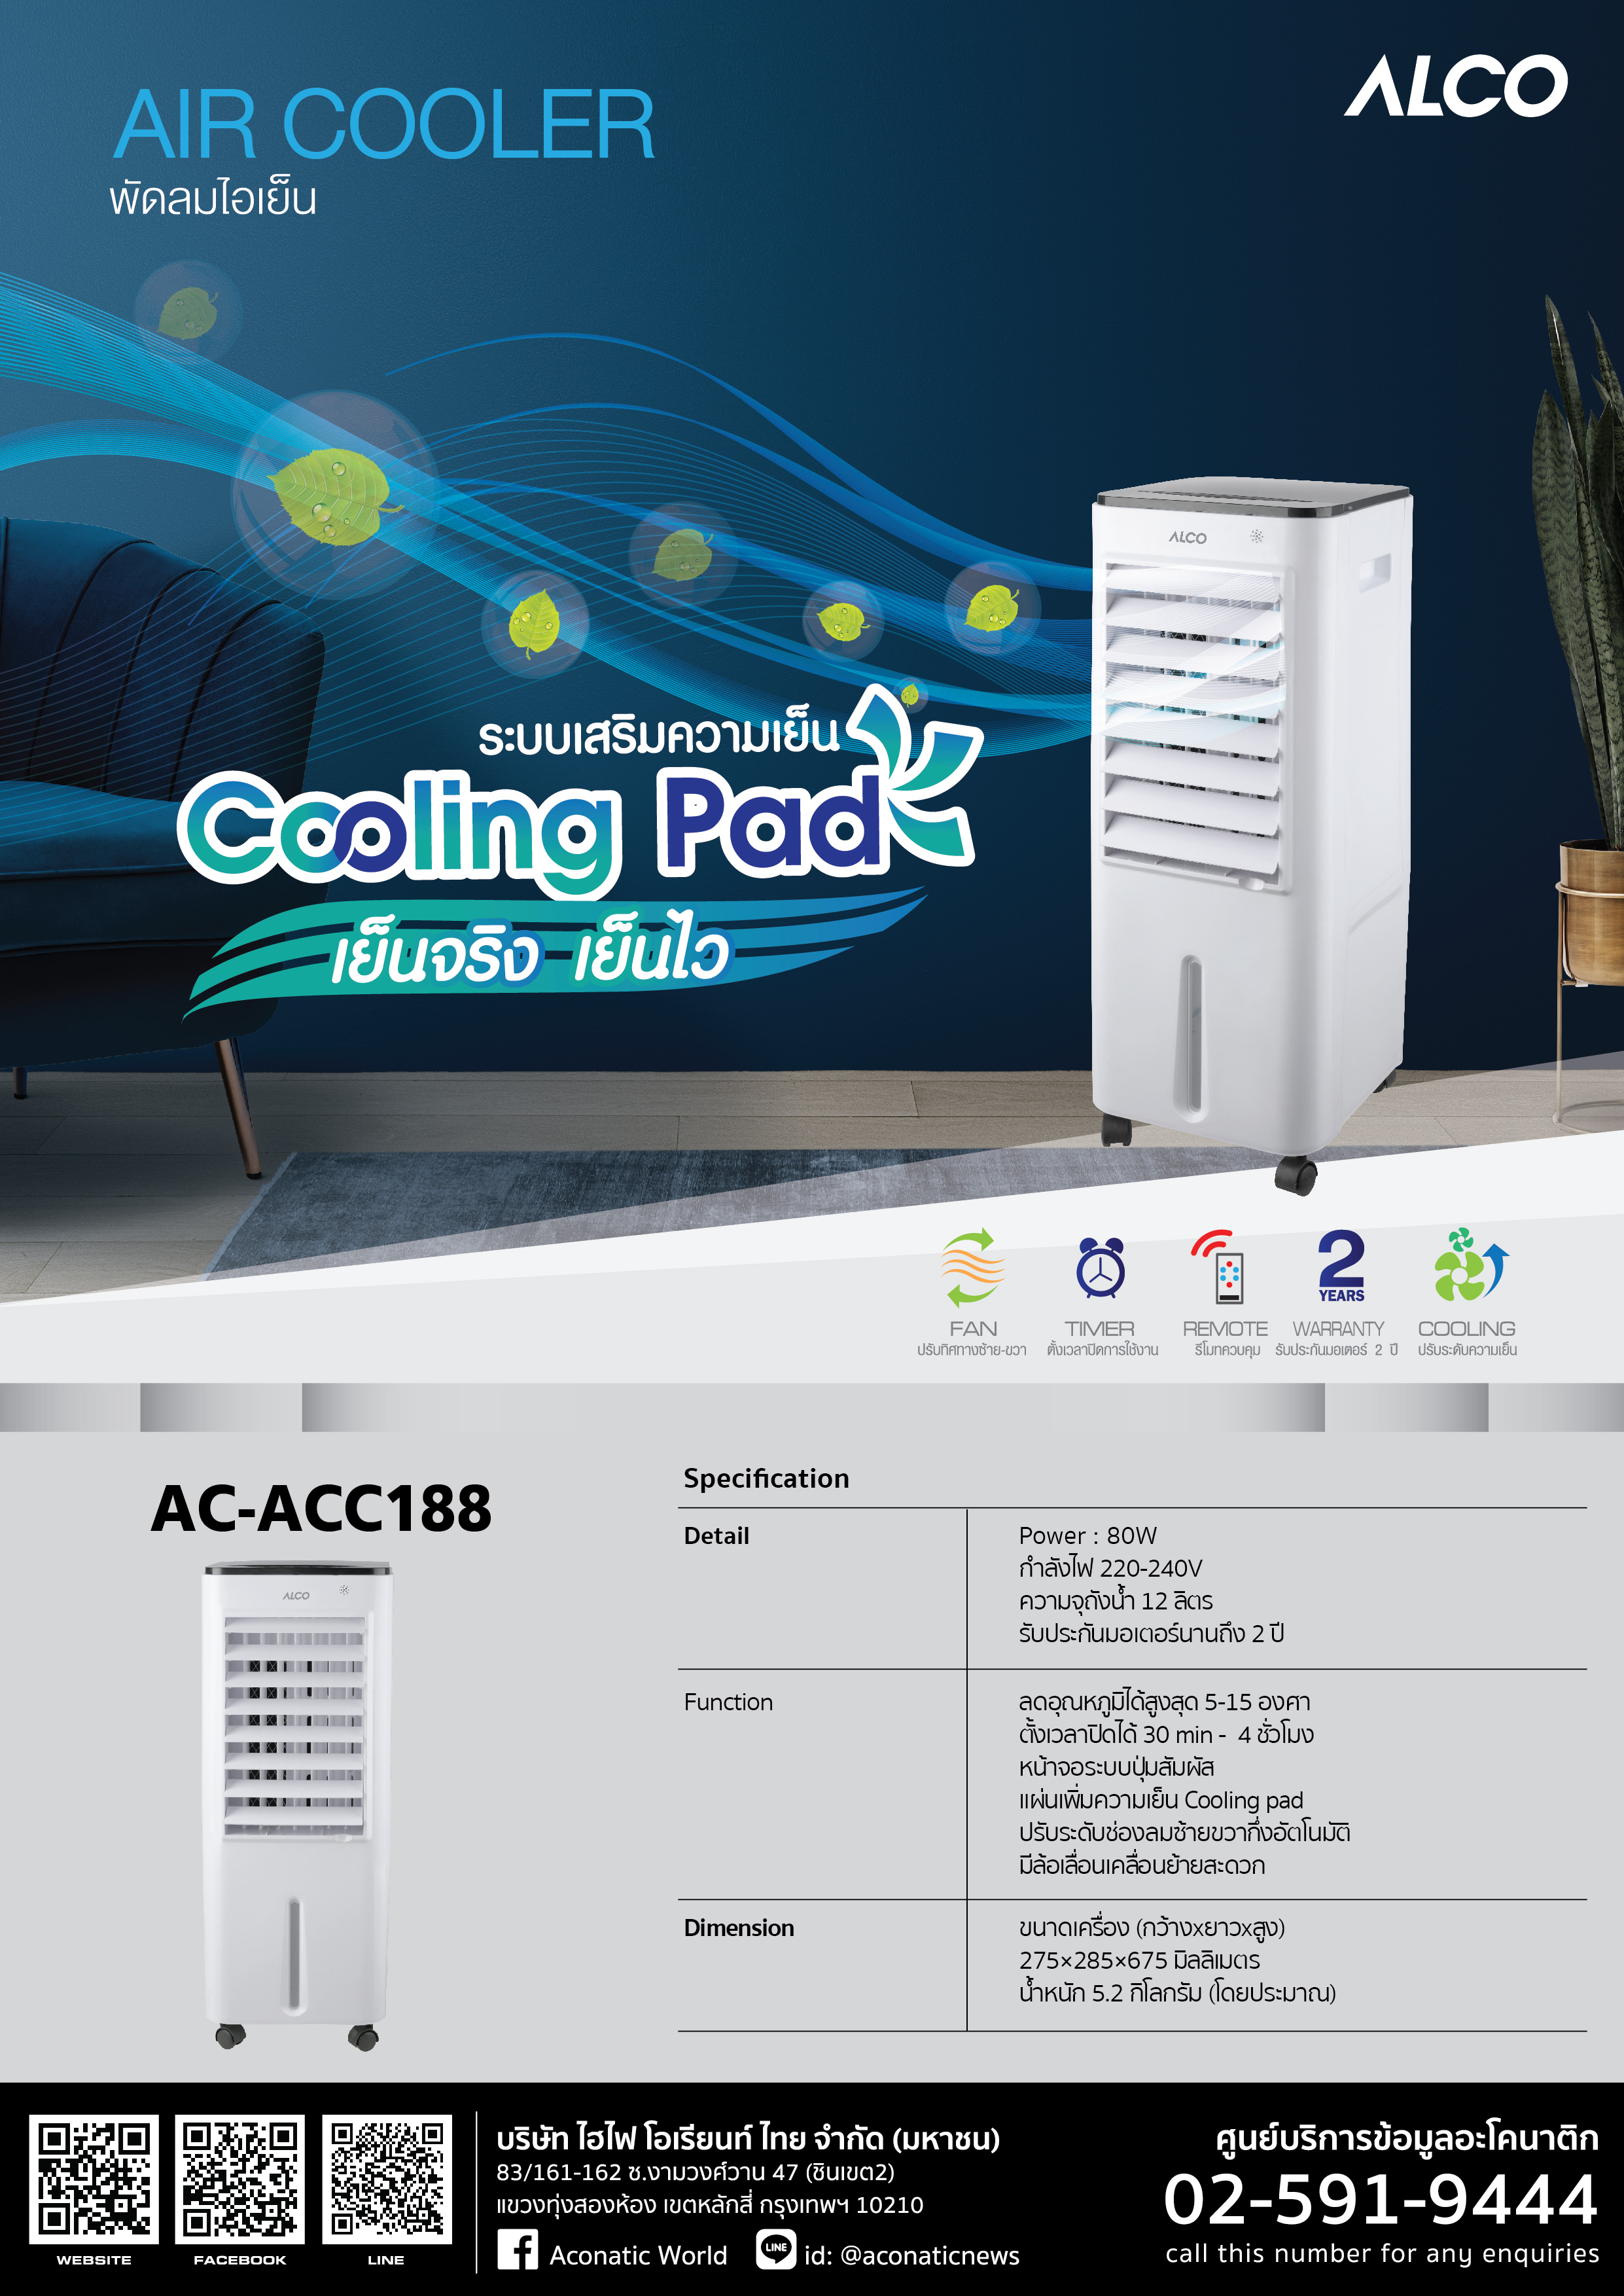 Air Cooler model AN-ACC188